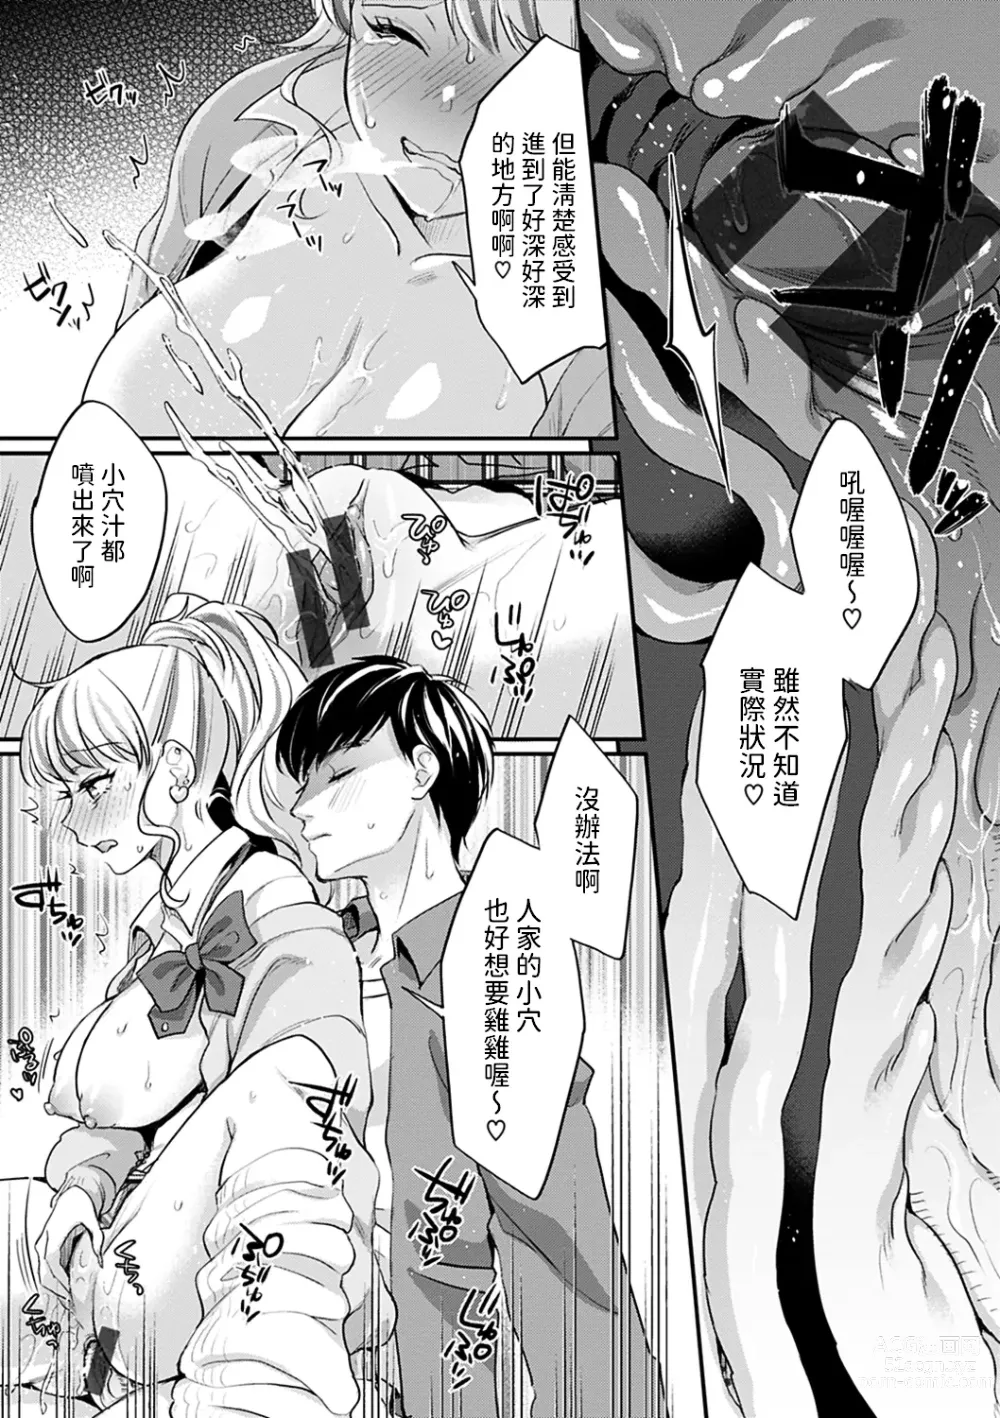 Page 33 of manga Deka Chin Shika Katan!